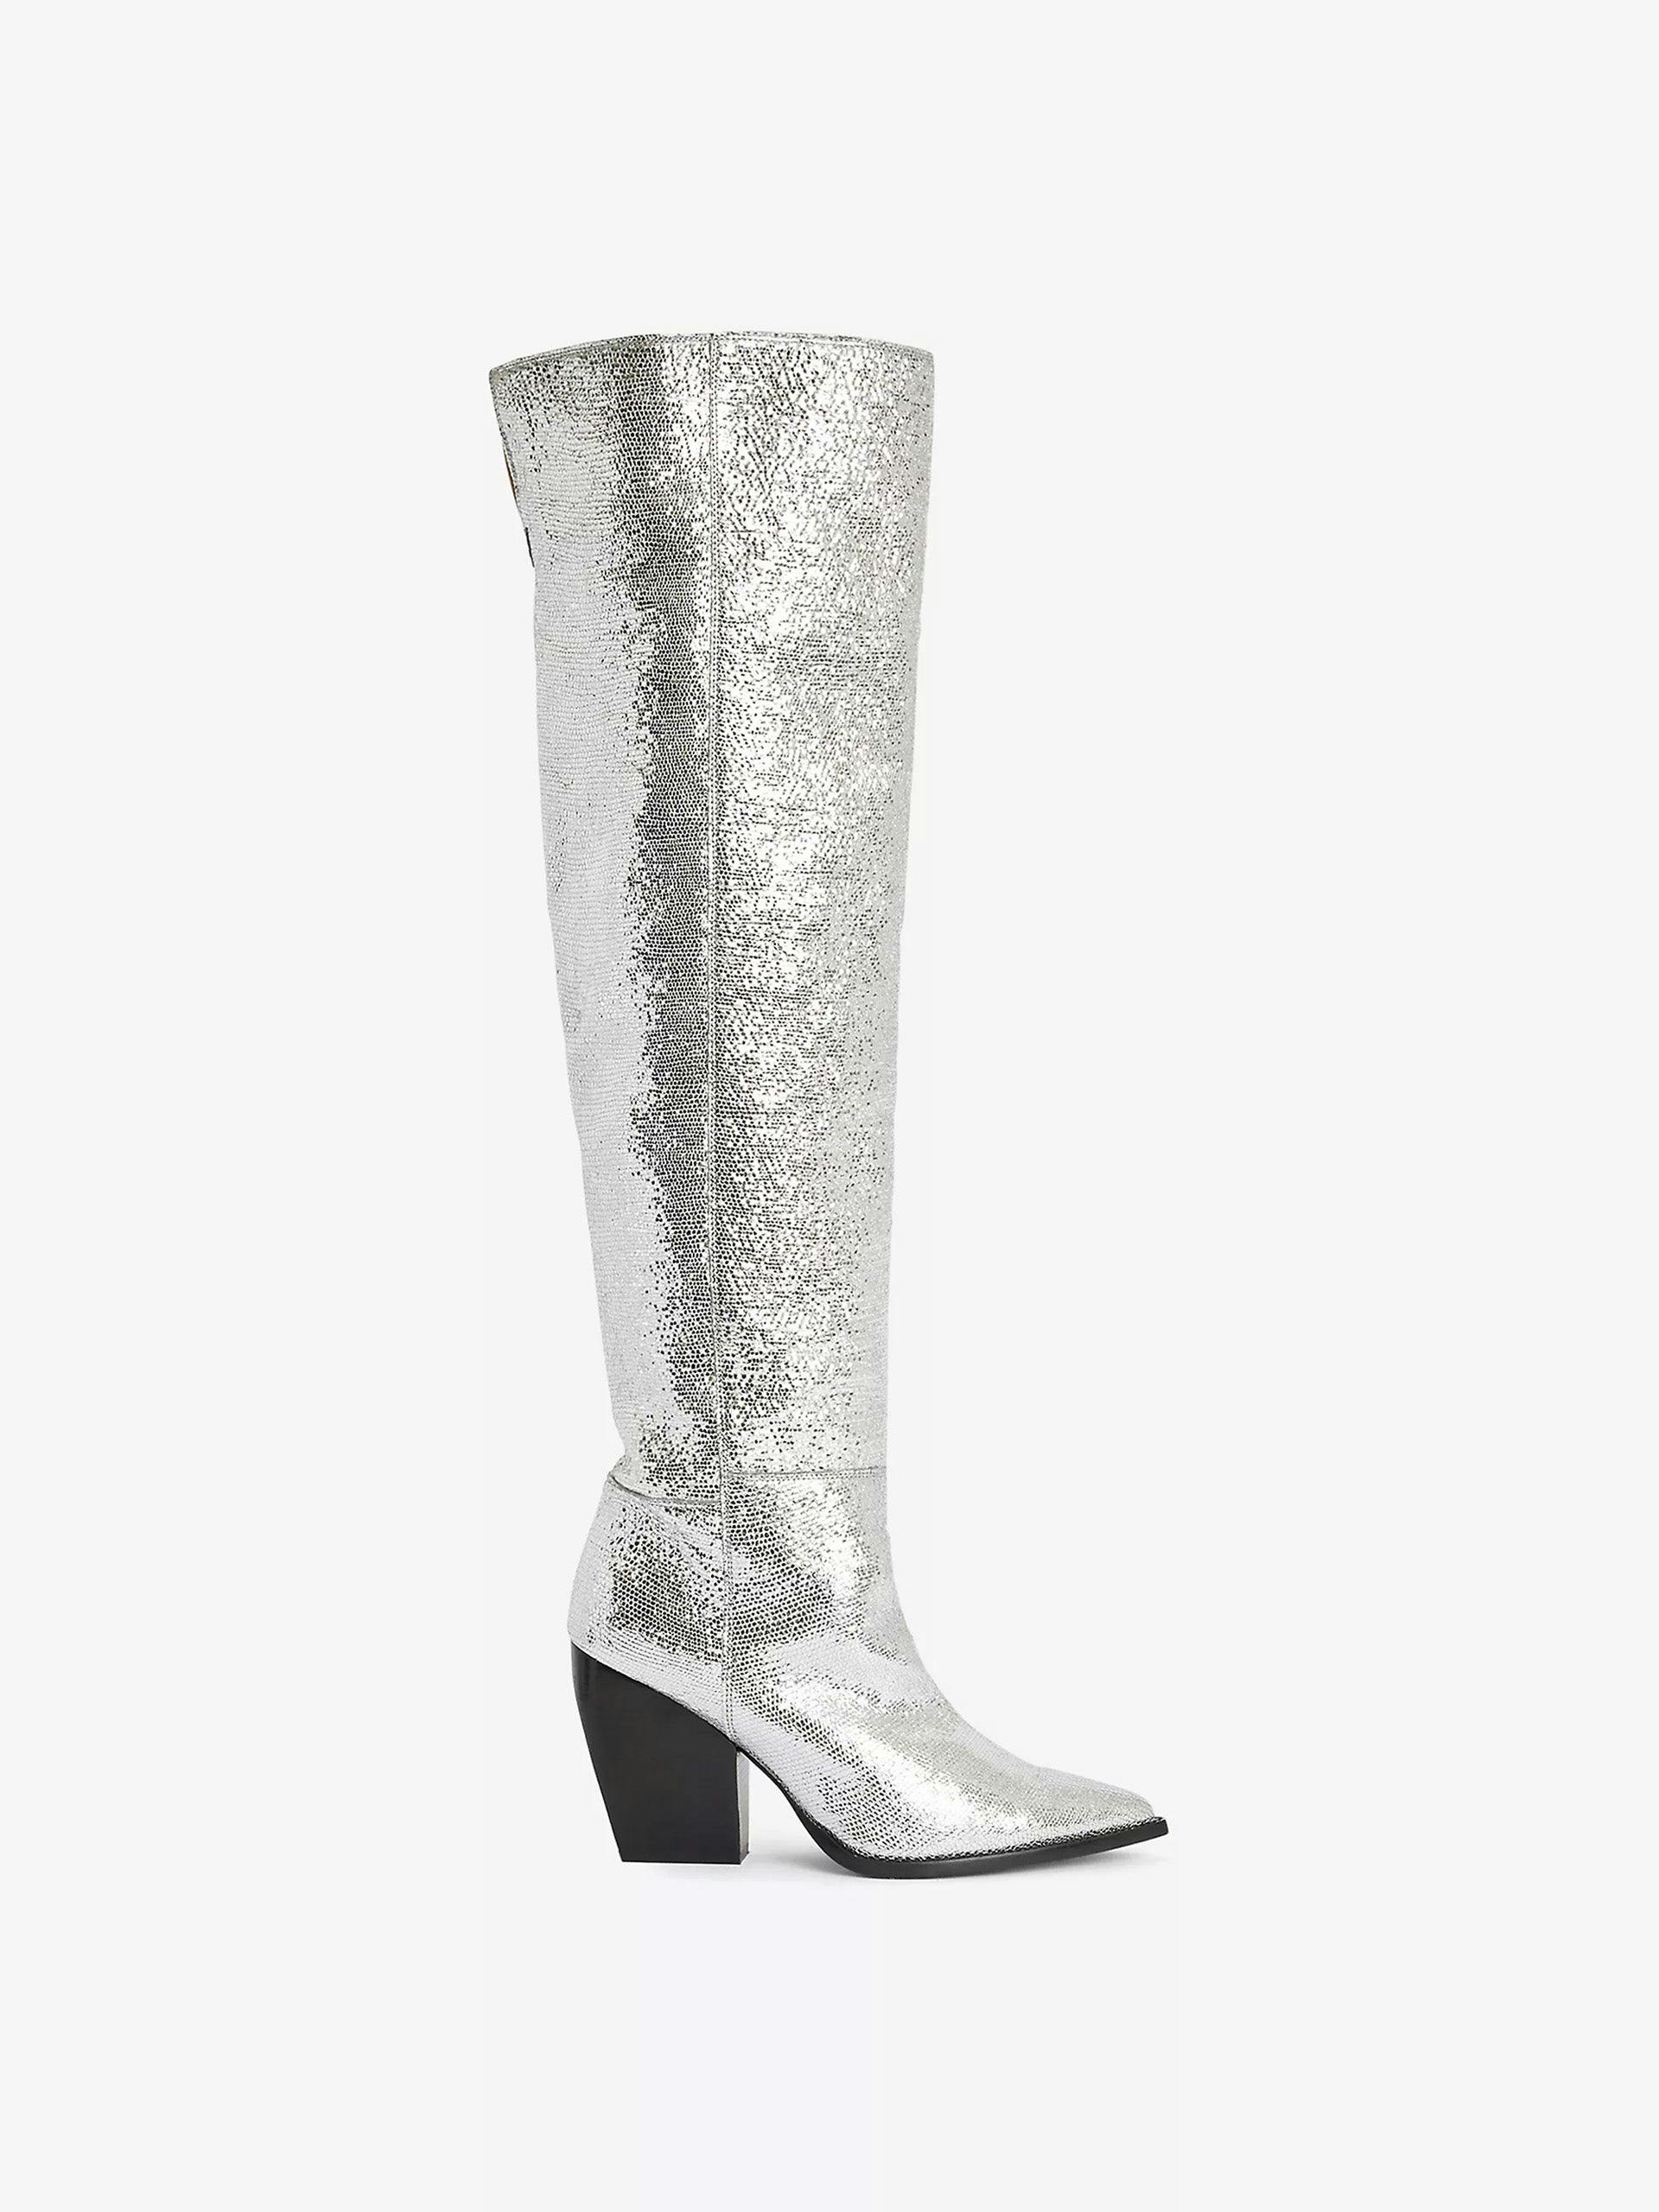 Reina metallic heeled over-the-knee leather boots